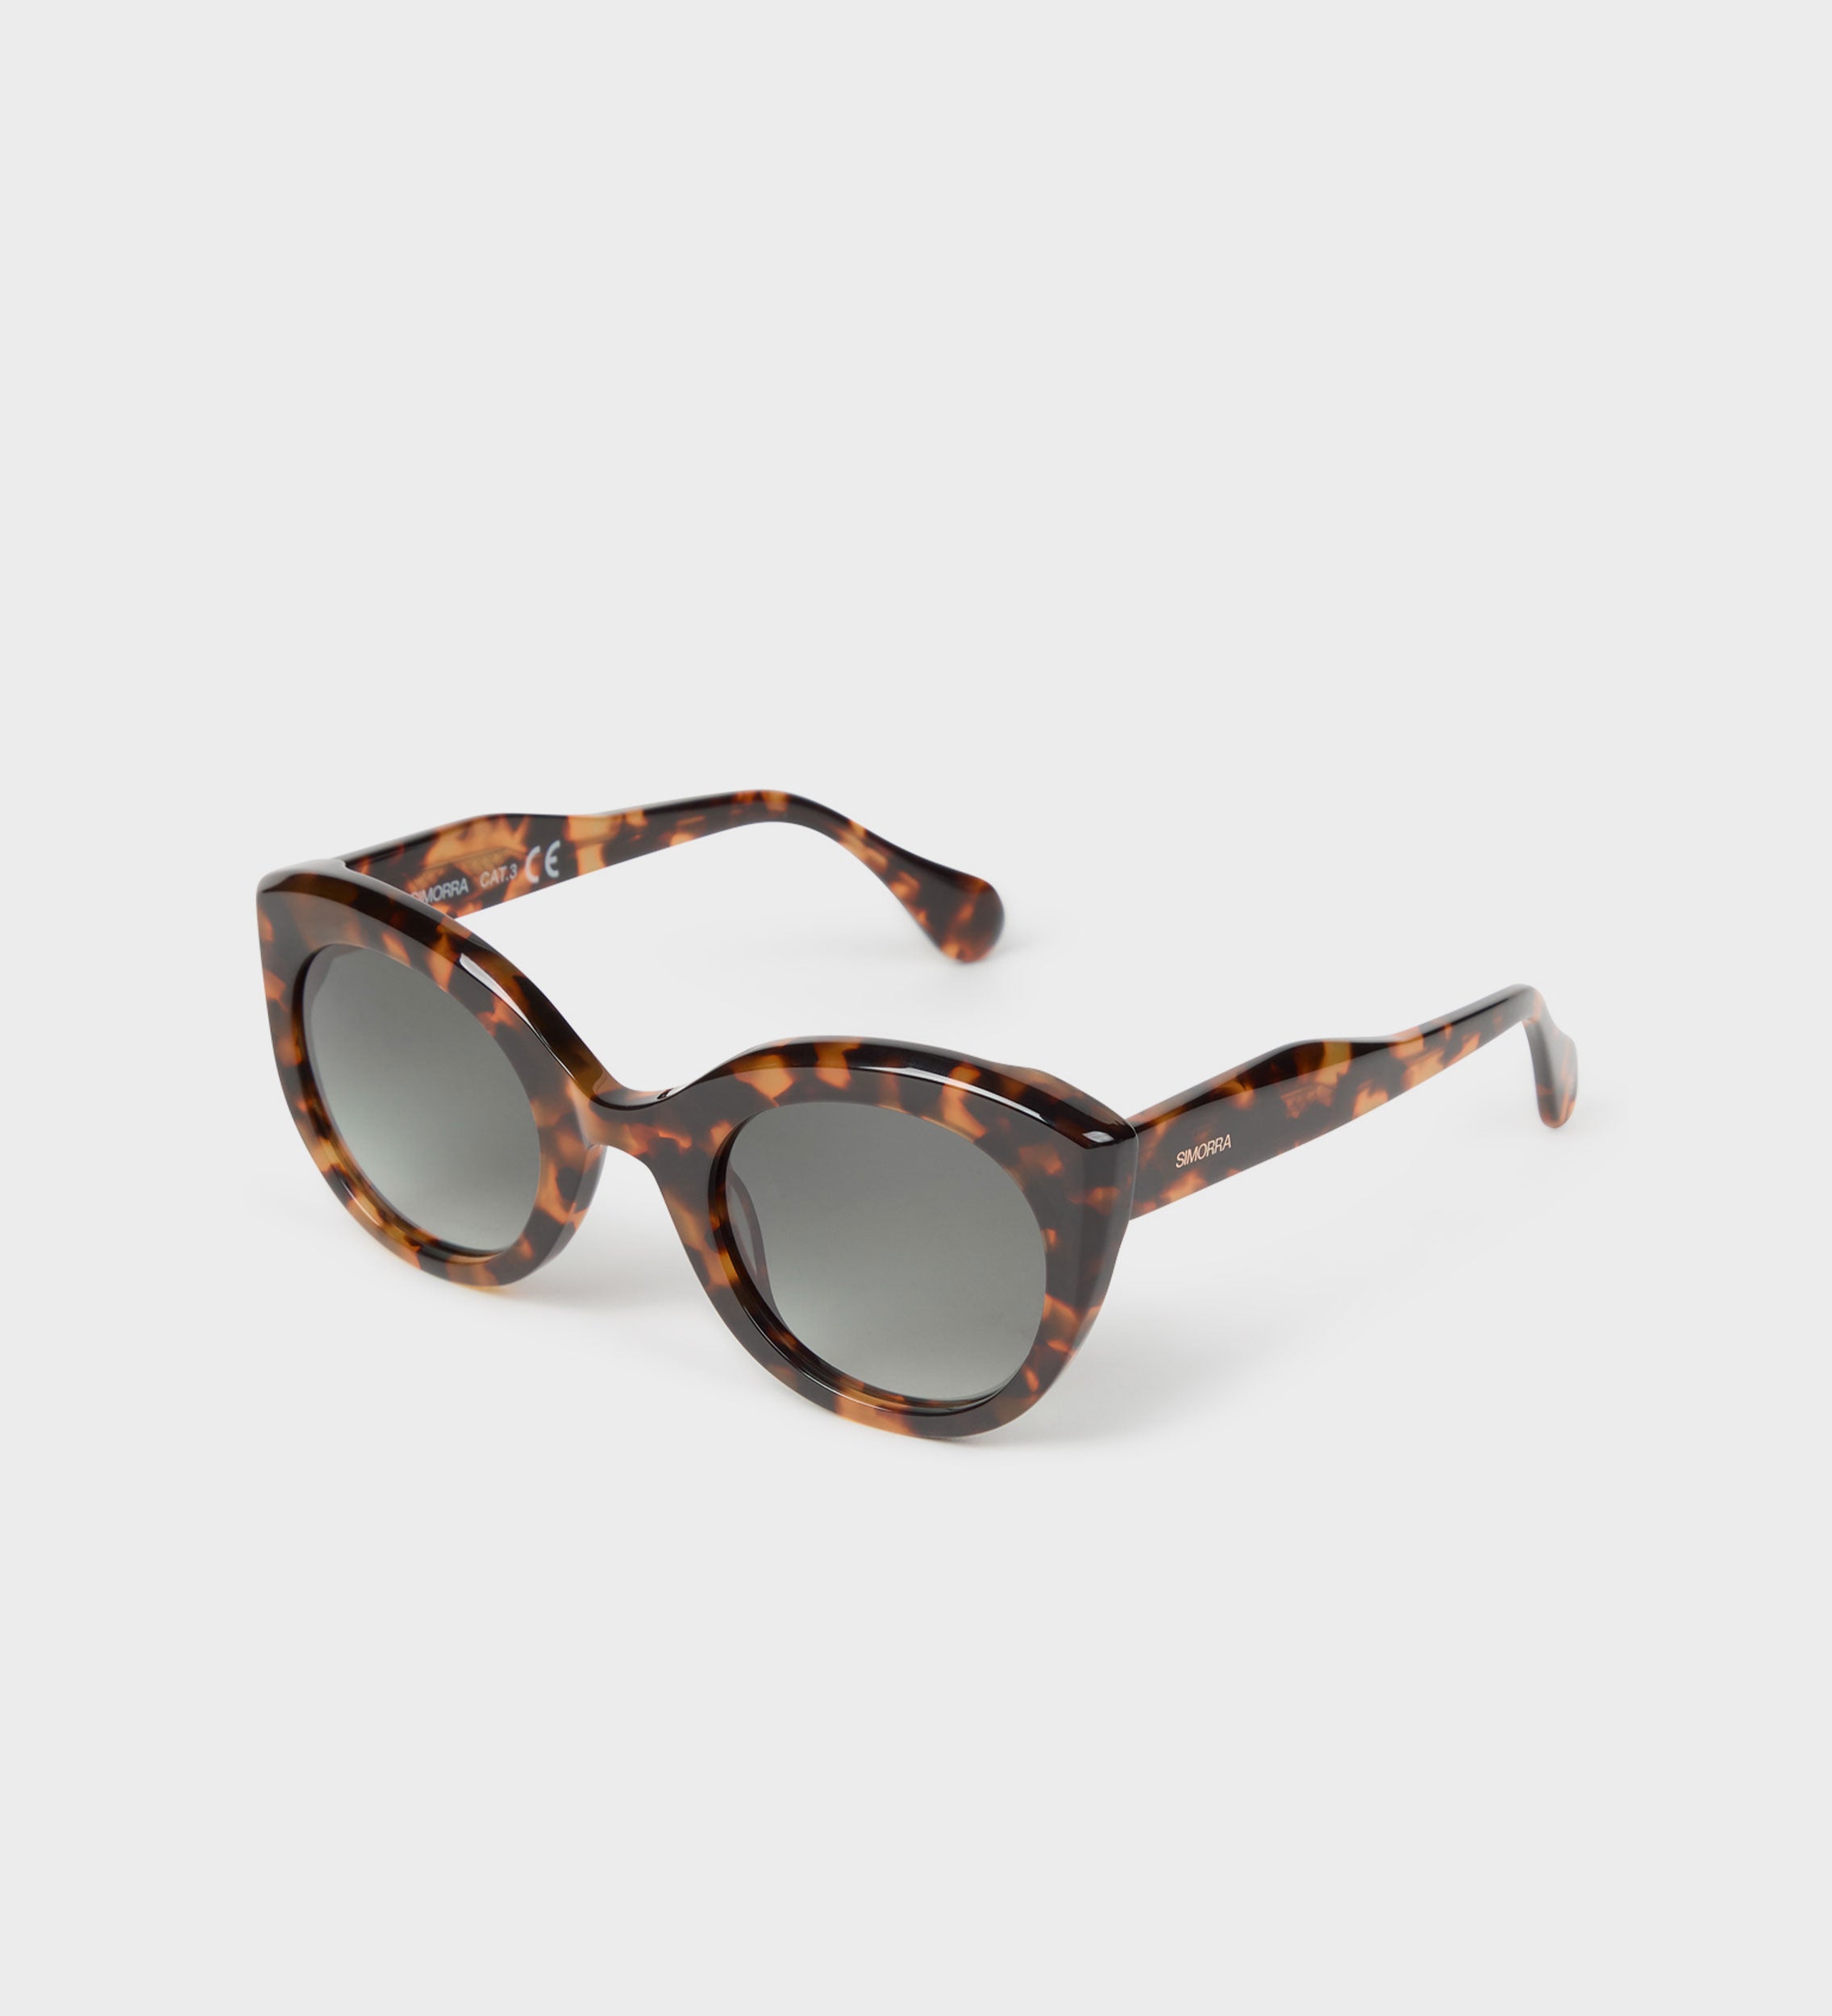 Oval cat eye sunglasses